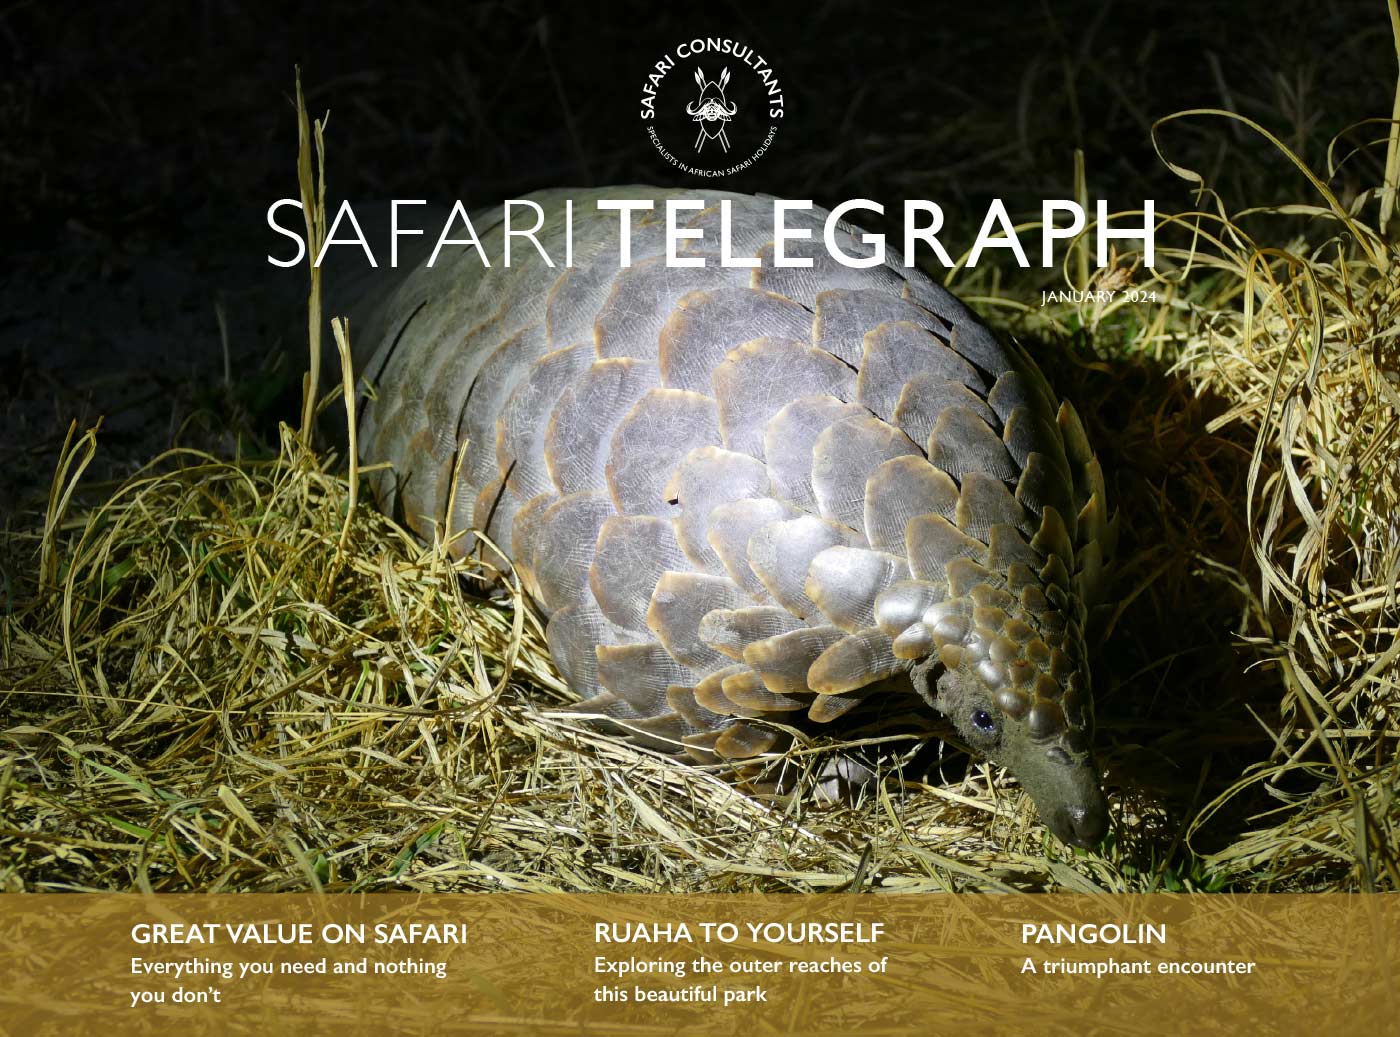 Safari Telegraph – January 2024